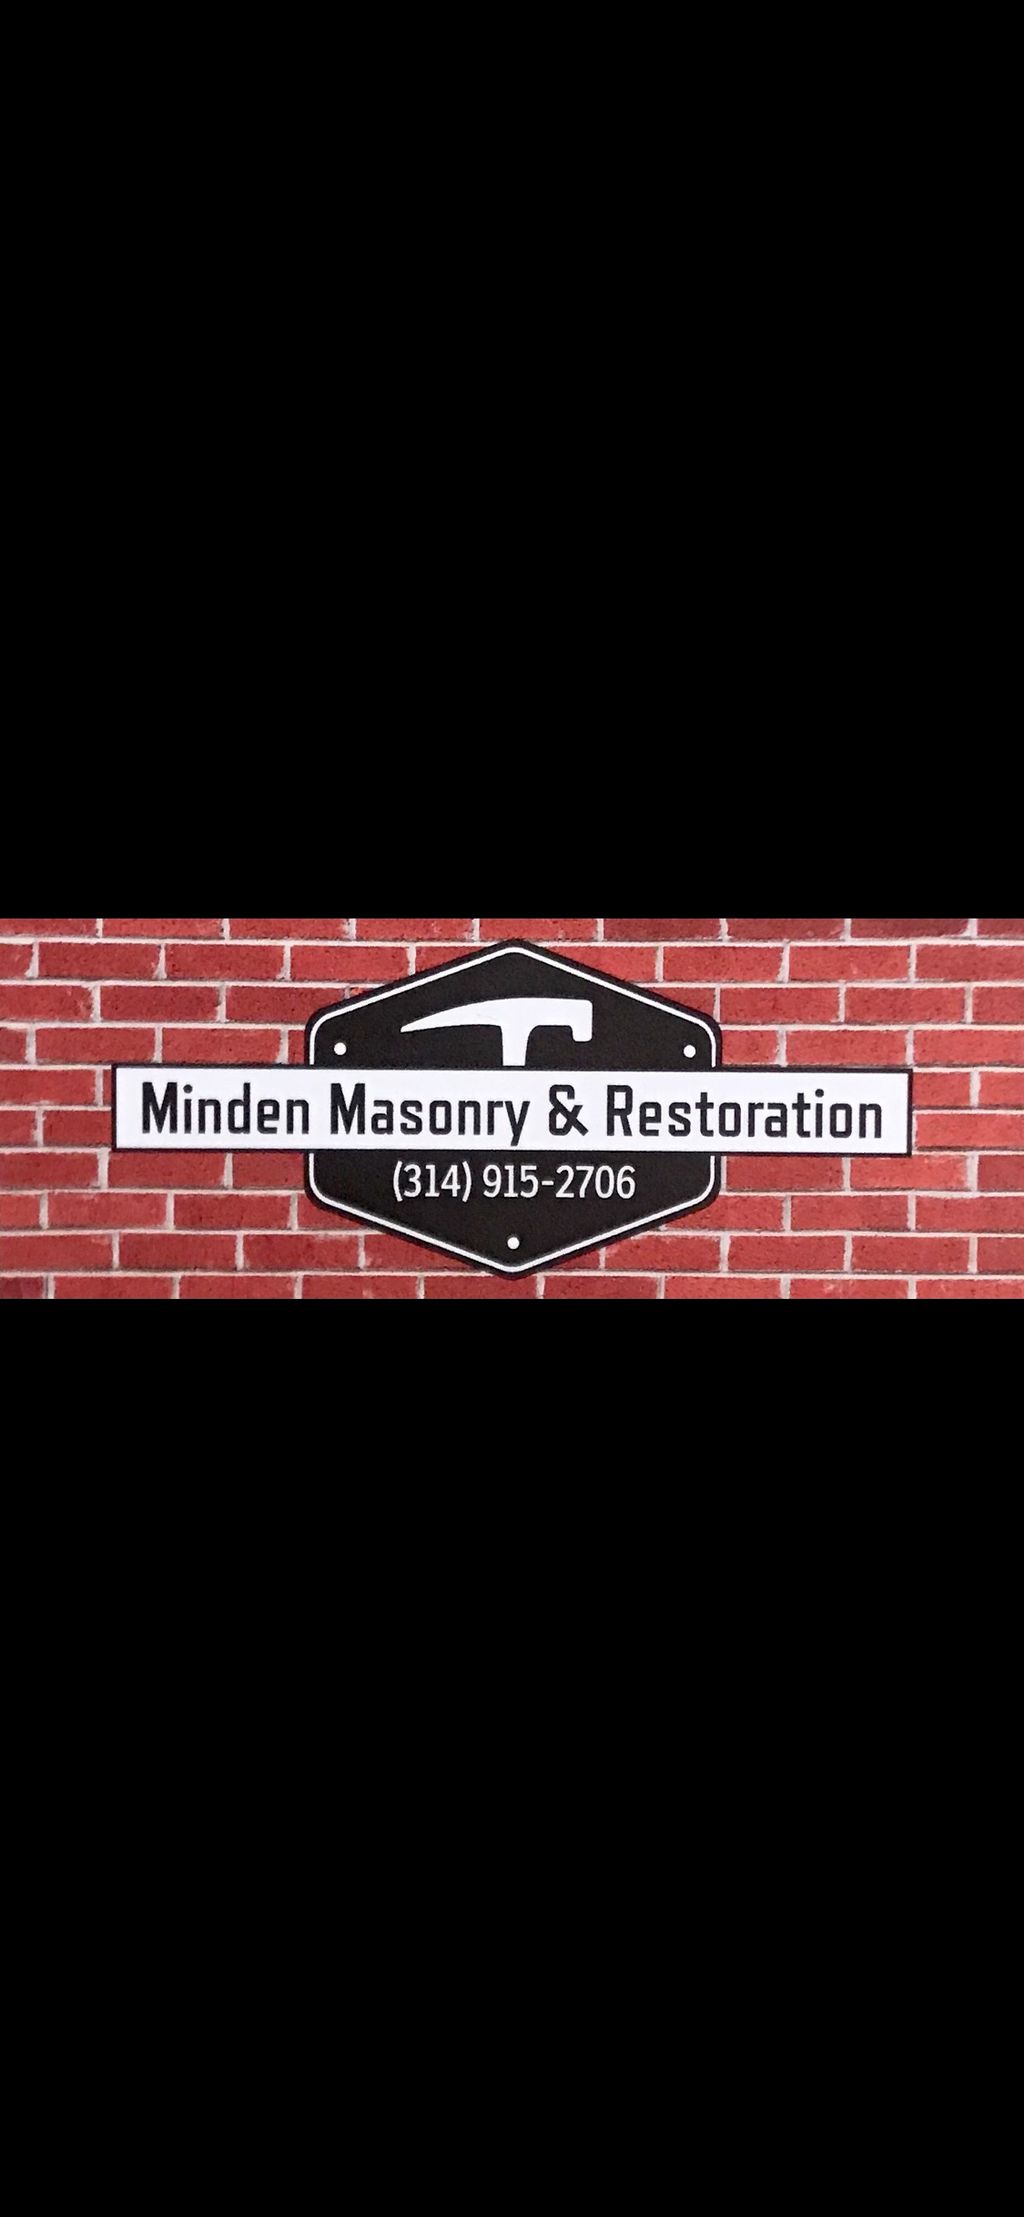 Minden masonry & restoration